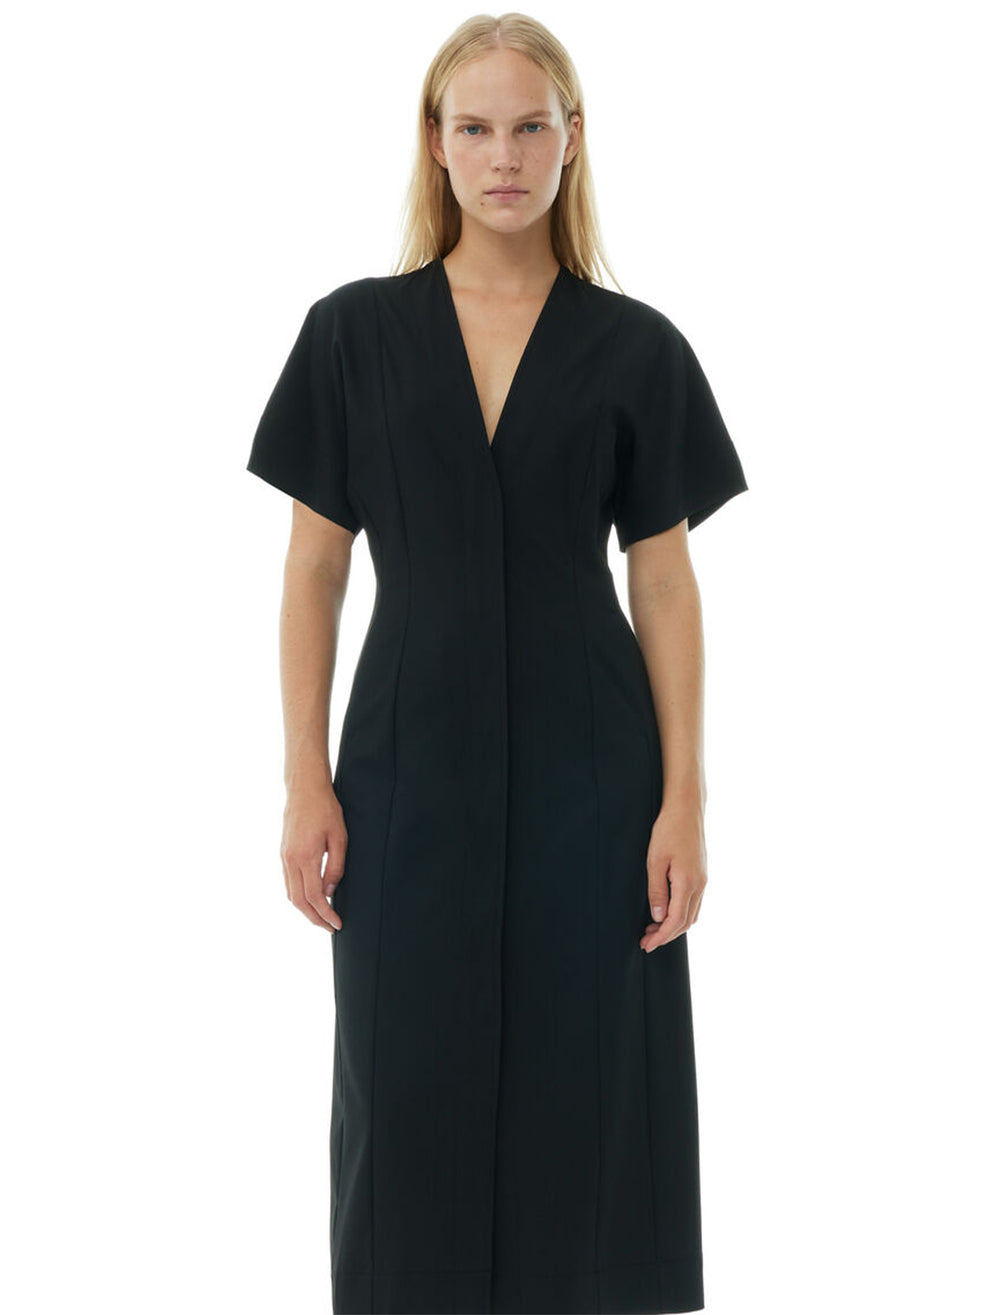 Model wearing GANNI's melange midi dress in black.